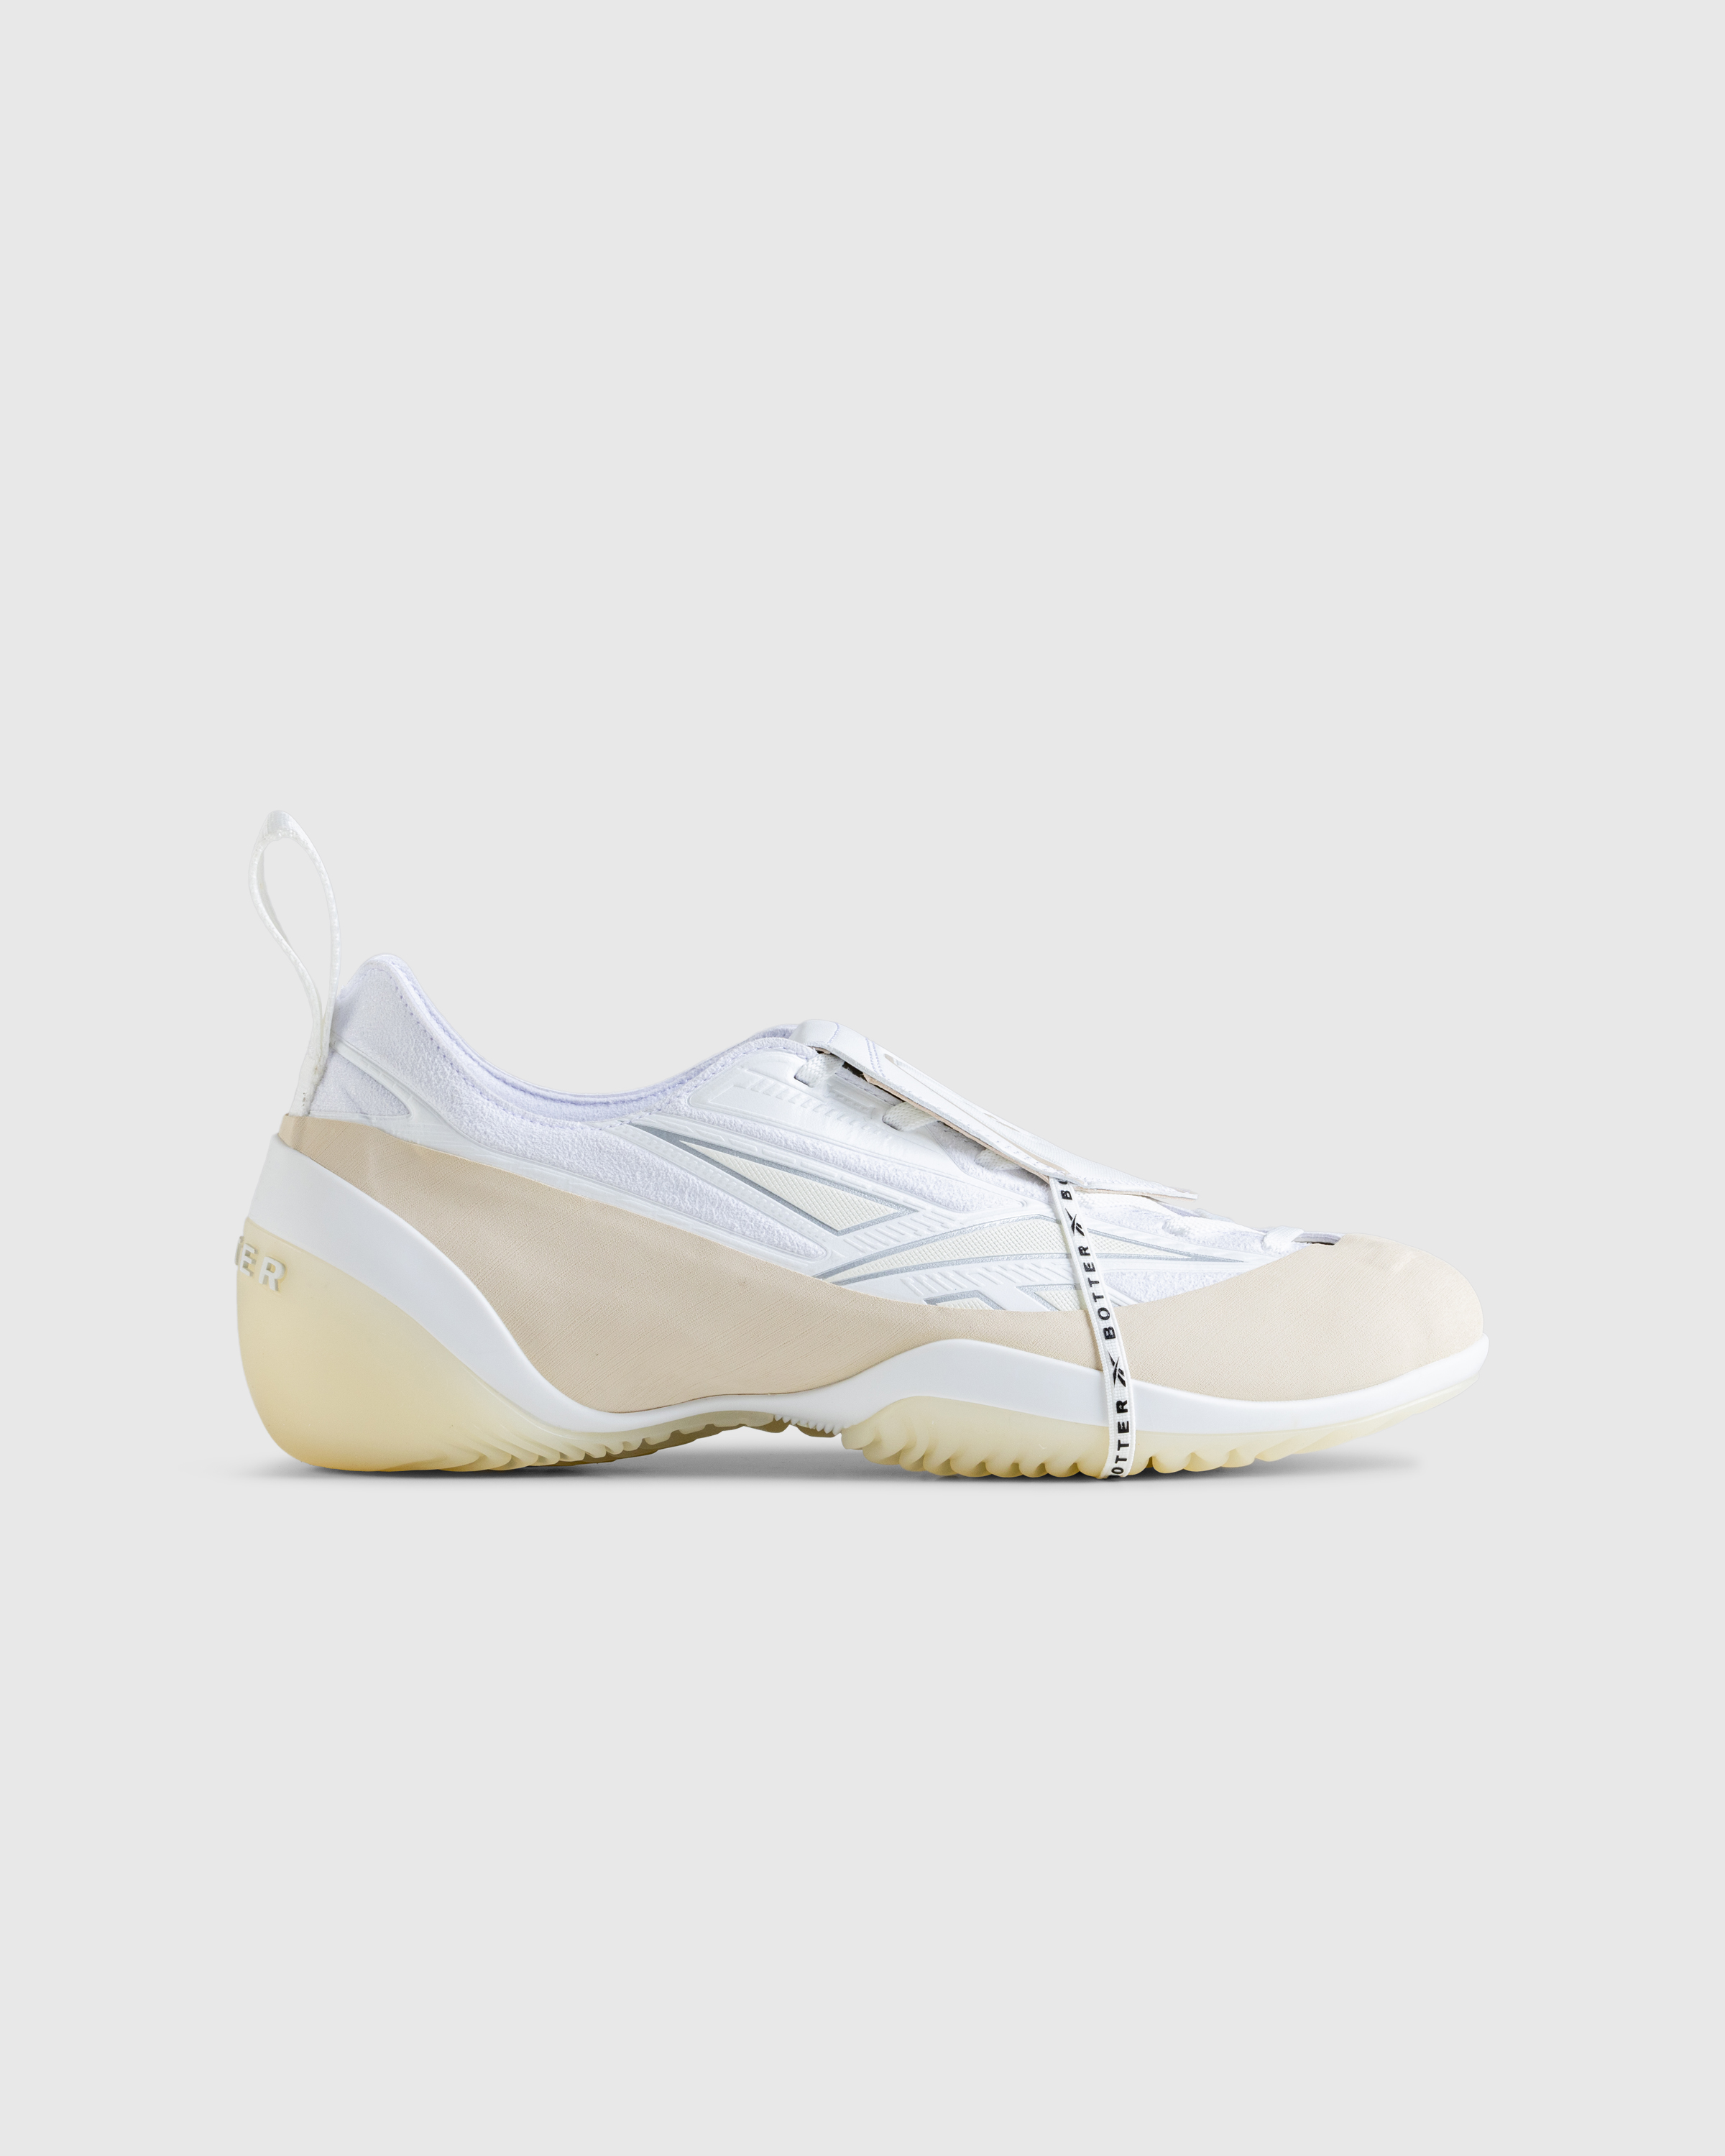 Reebok x Botter – Energia Bo Kèts White/Beige - Sneakers - Beige - Image 1